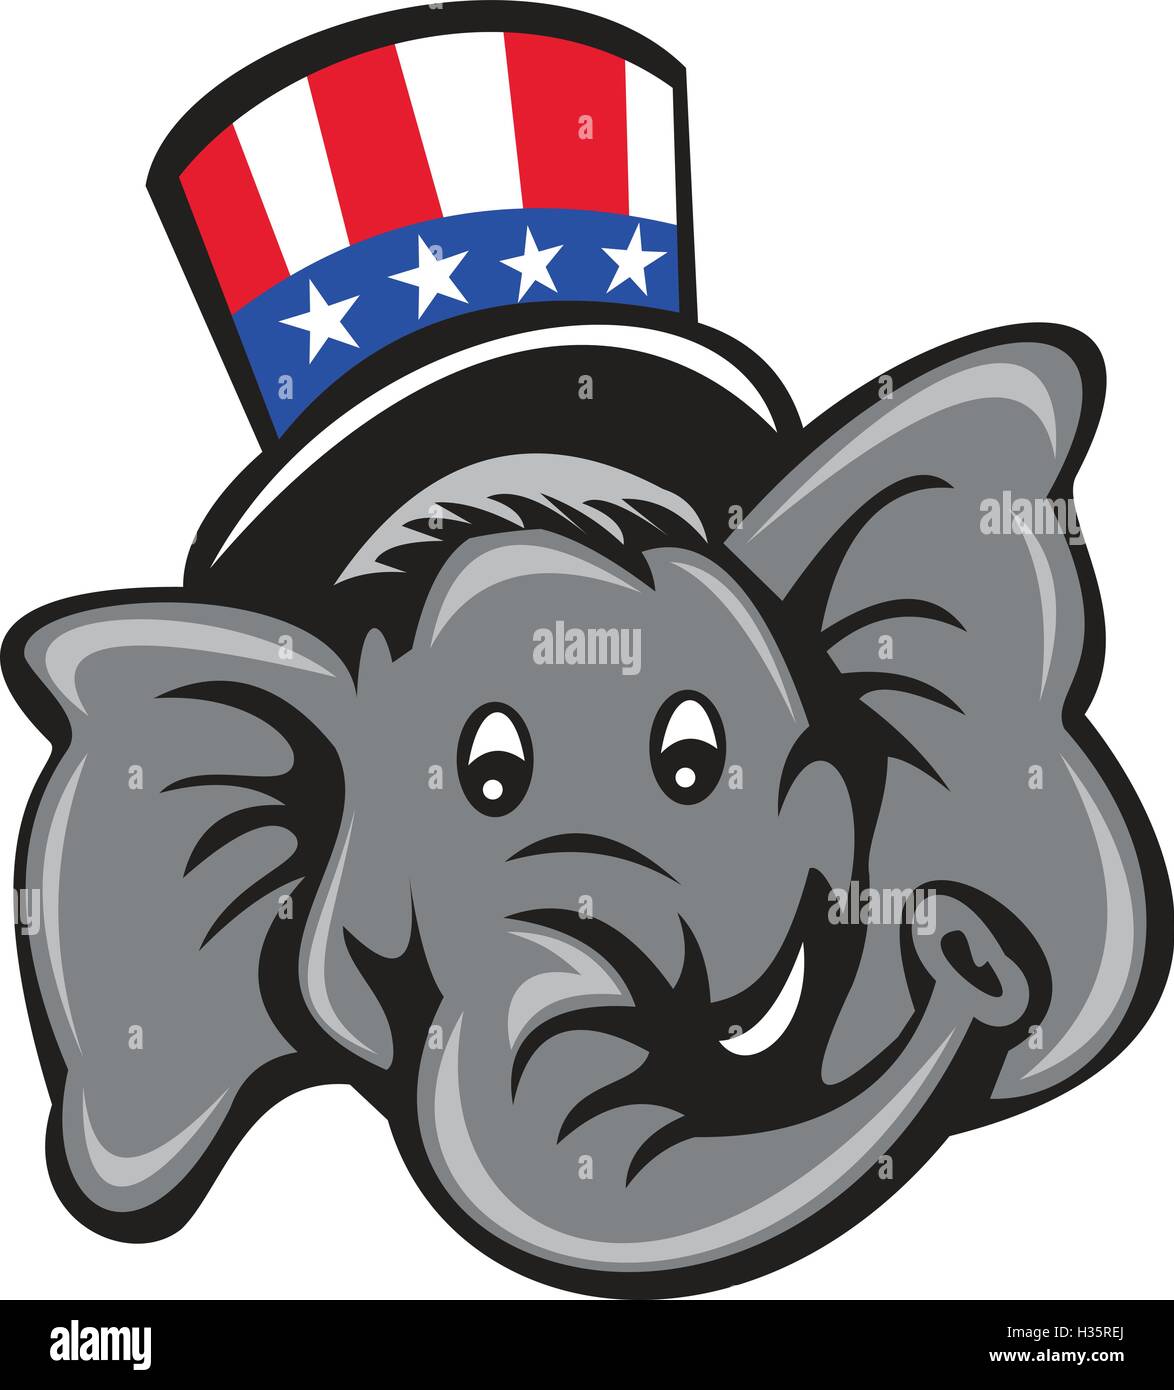 Image result for gop elephant cartoon